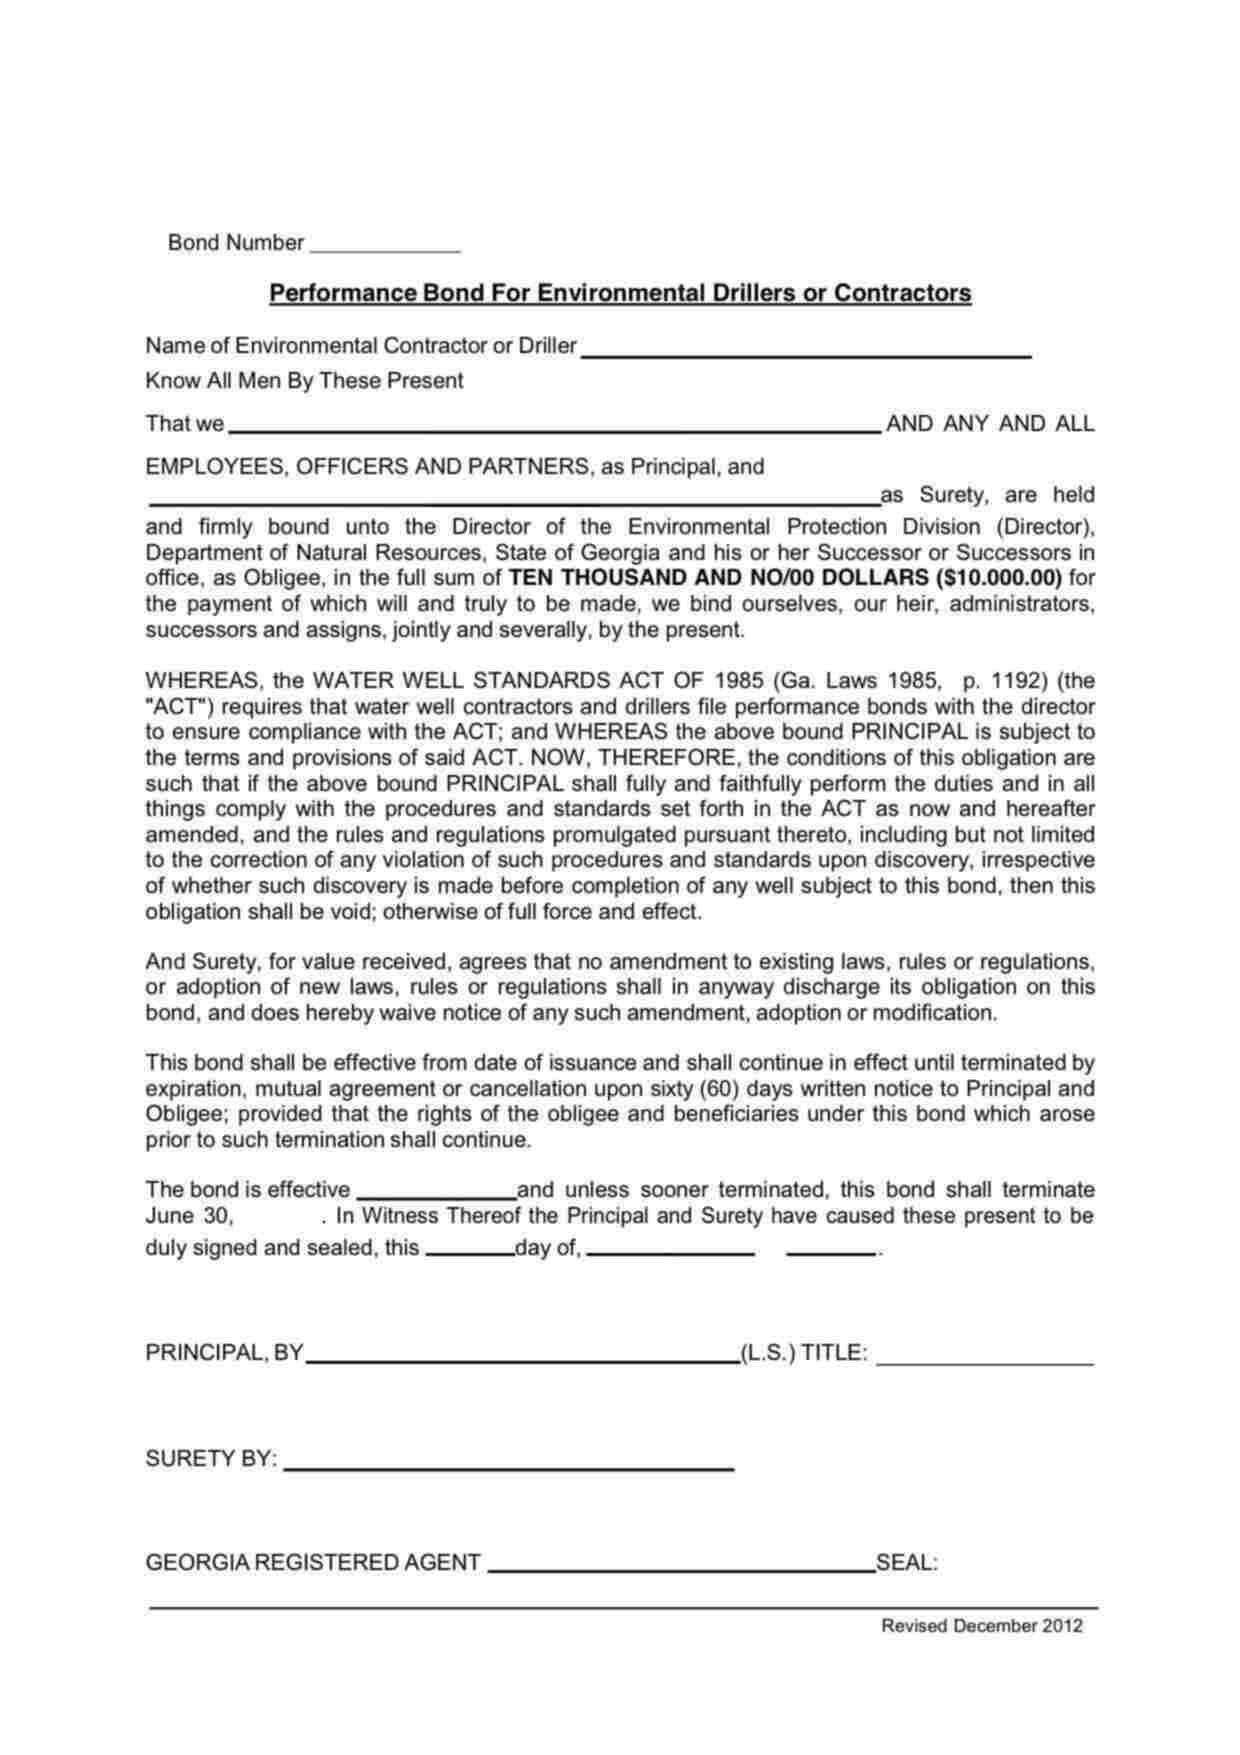 Georgia Environmental Drillers or Contractors Bond Form